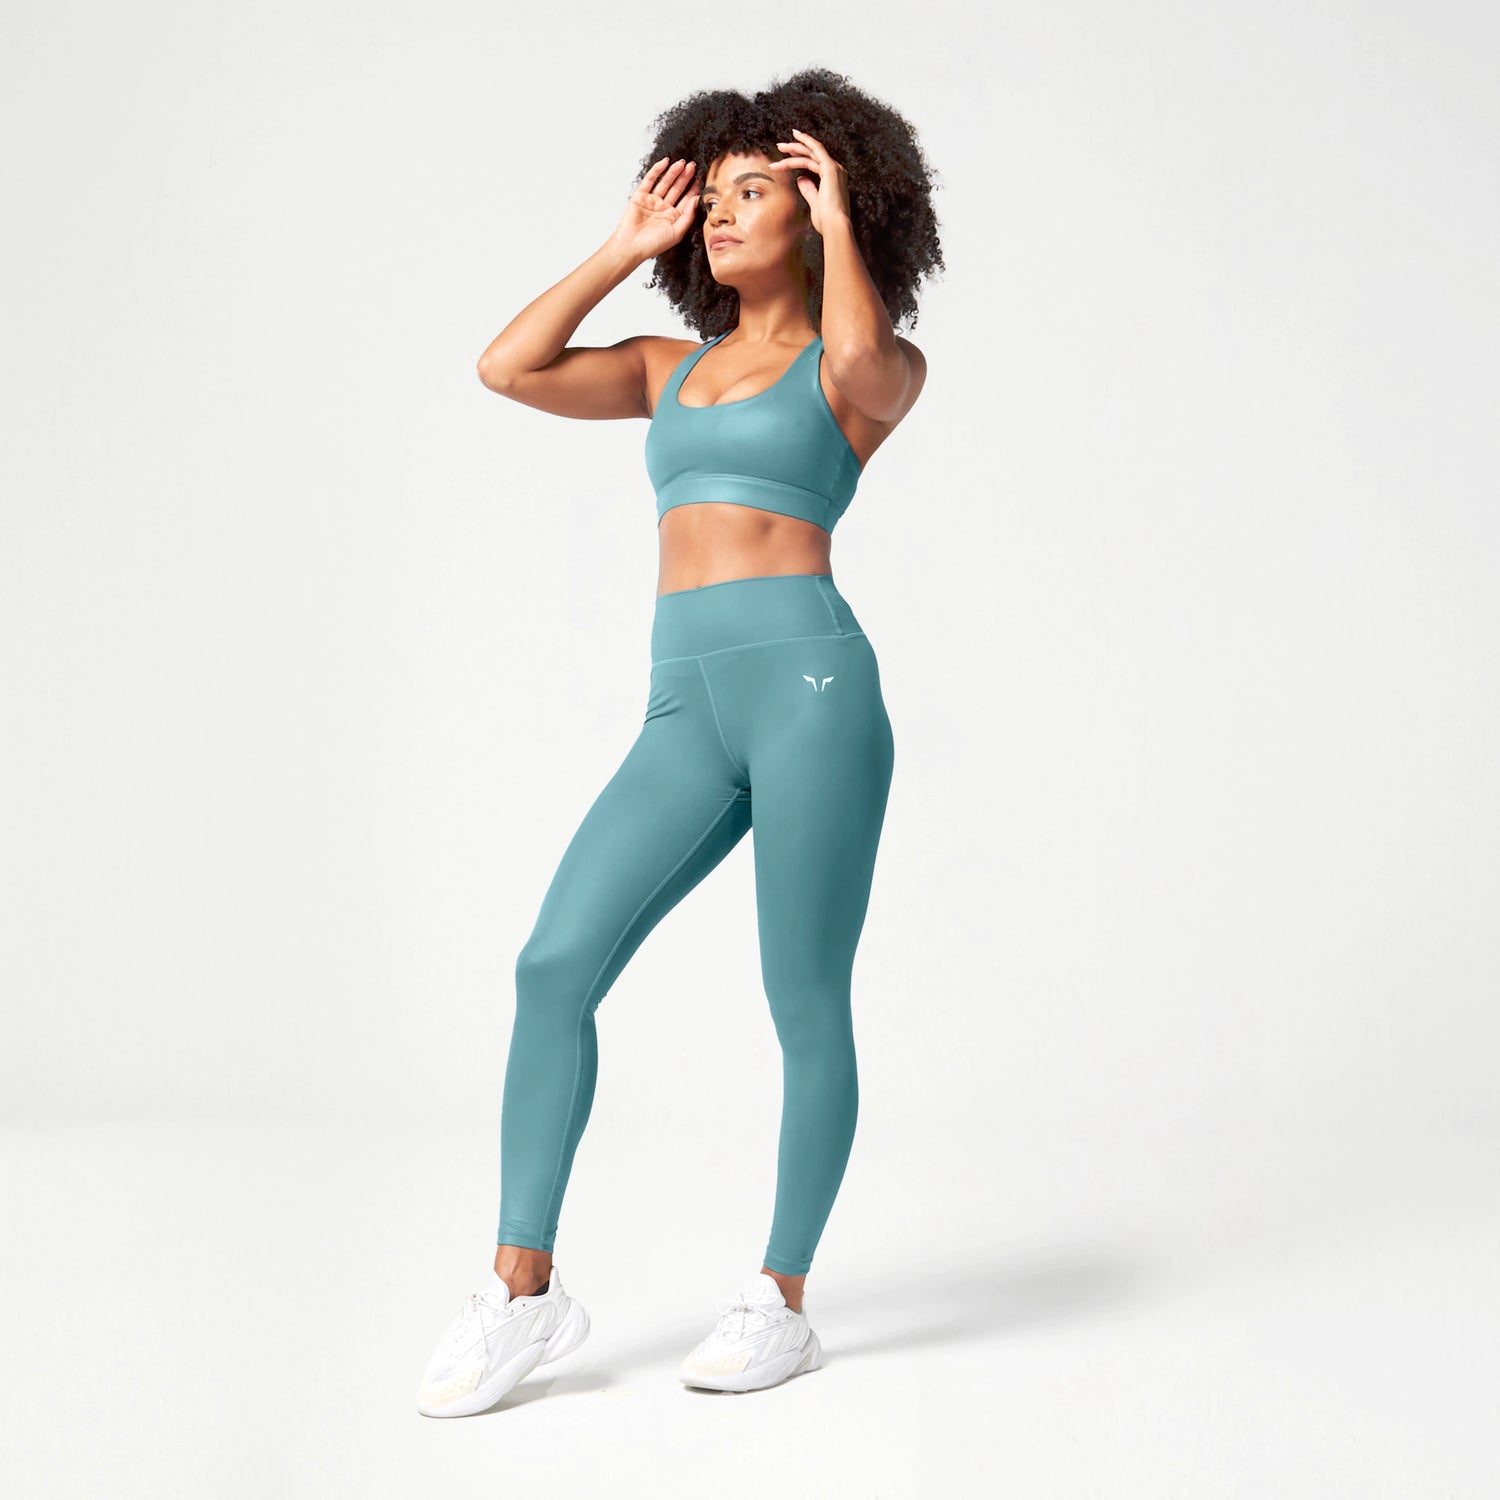 squatwolf-workout-clothes-glaze-leggings-hydro-gym-leggings-for-women